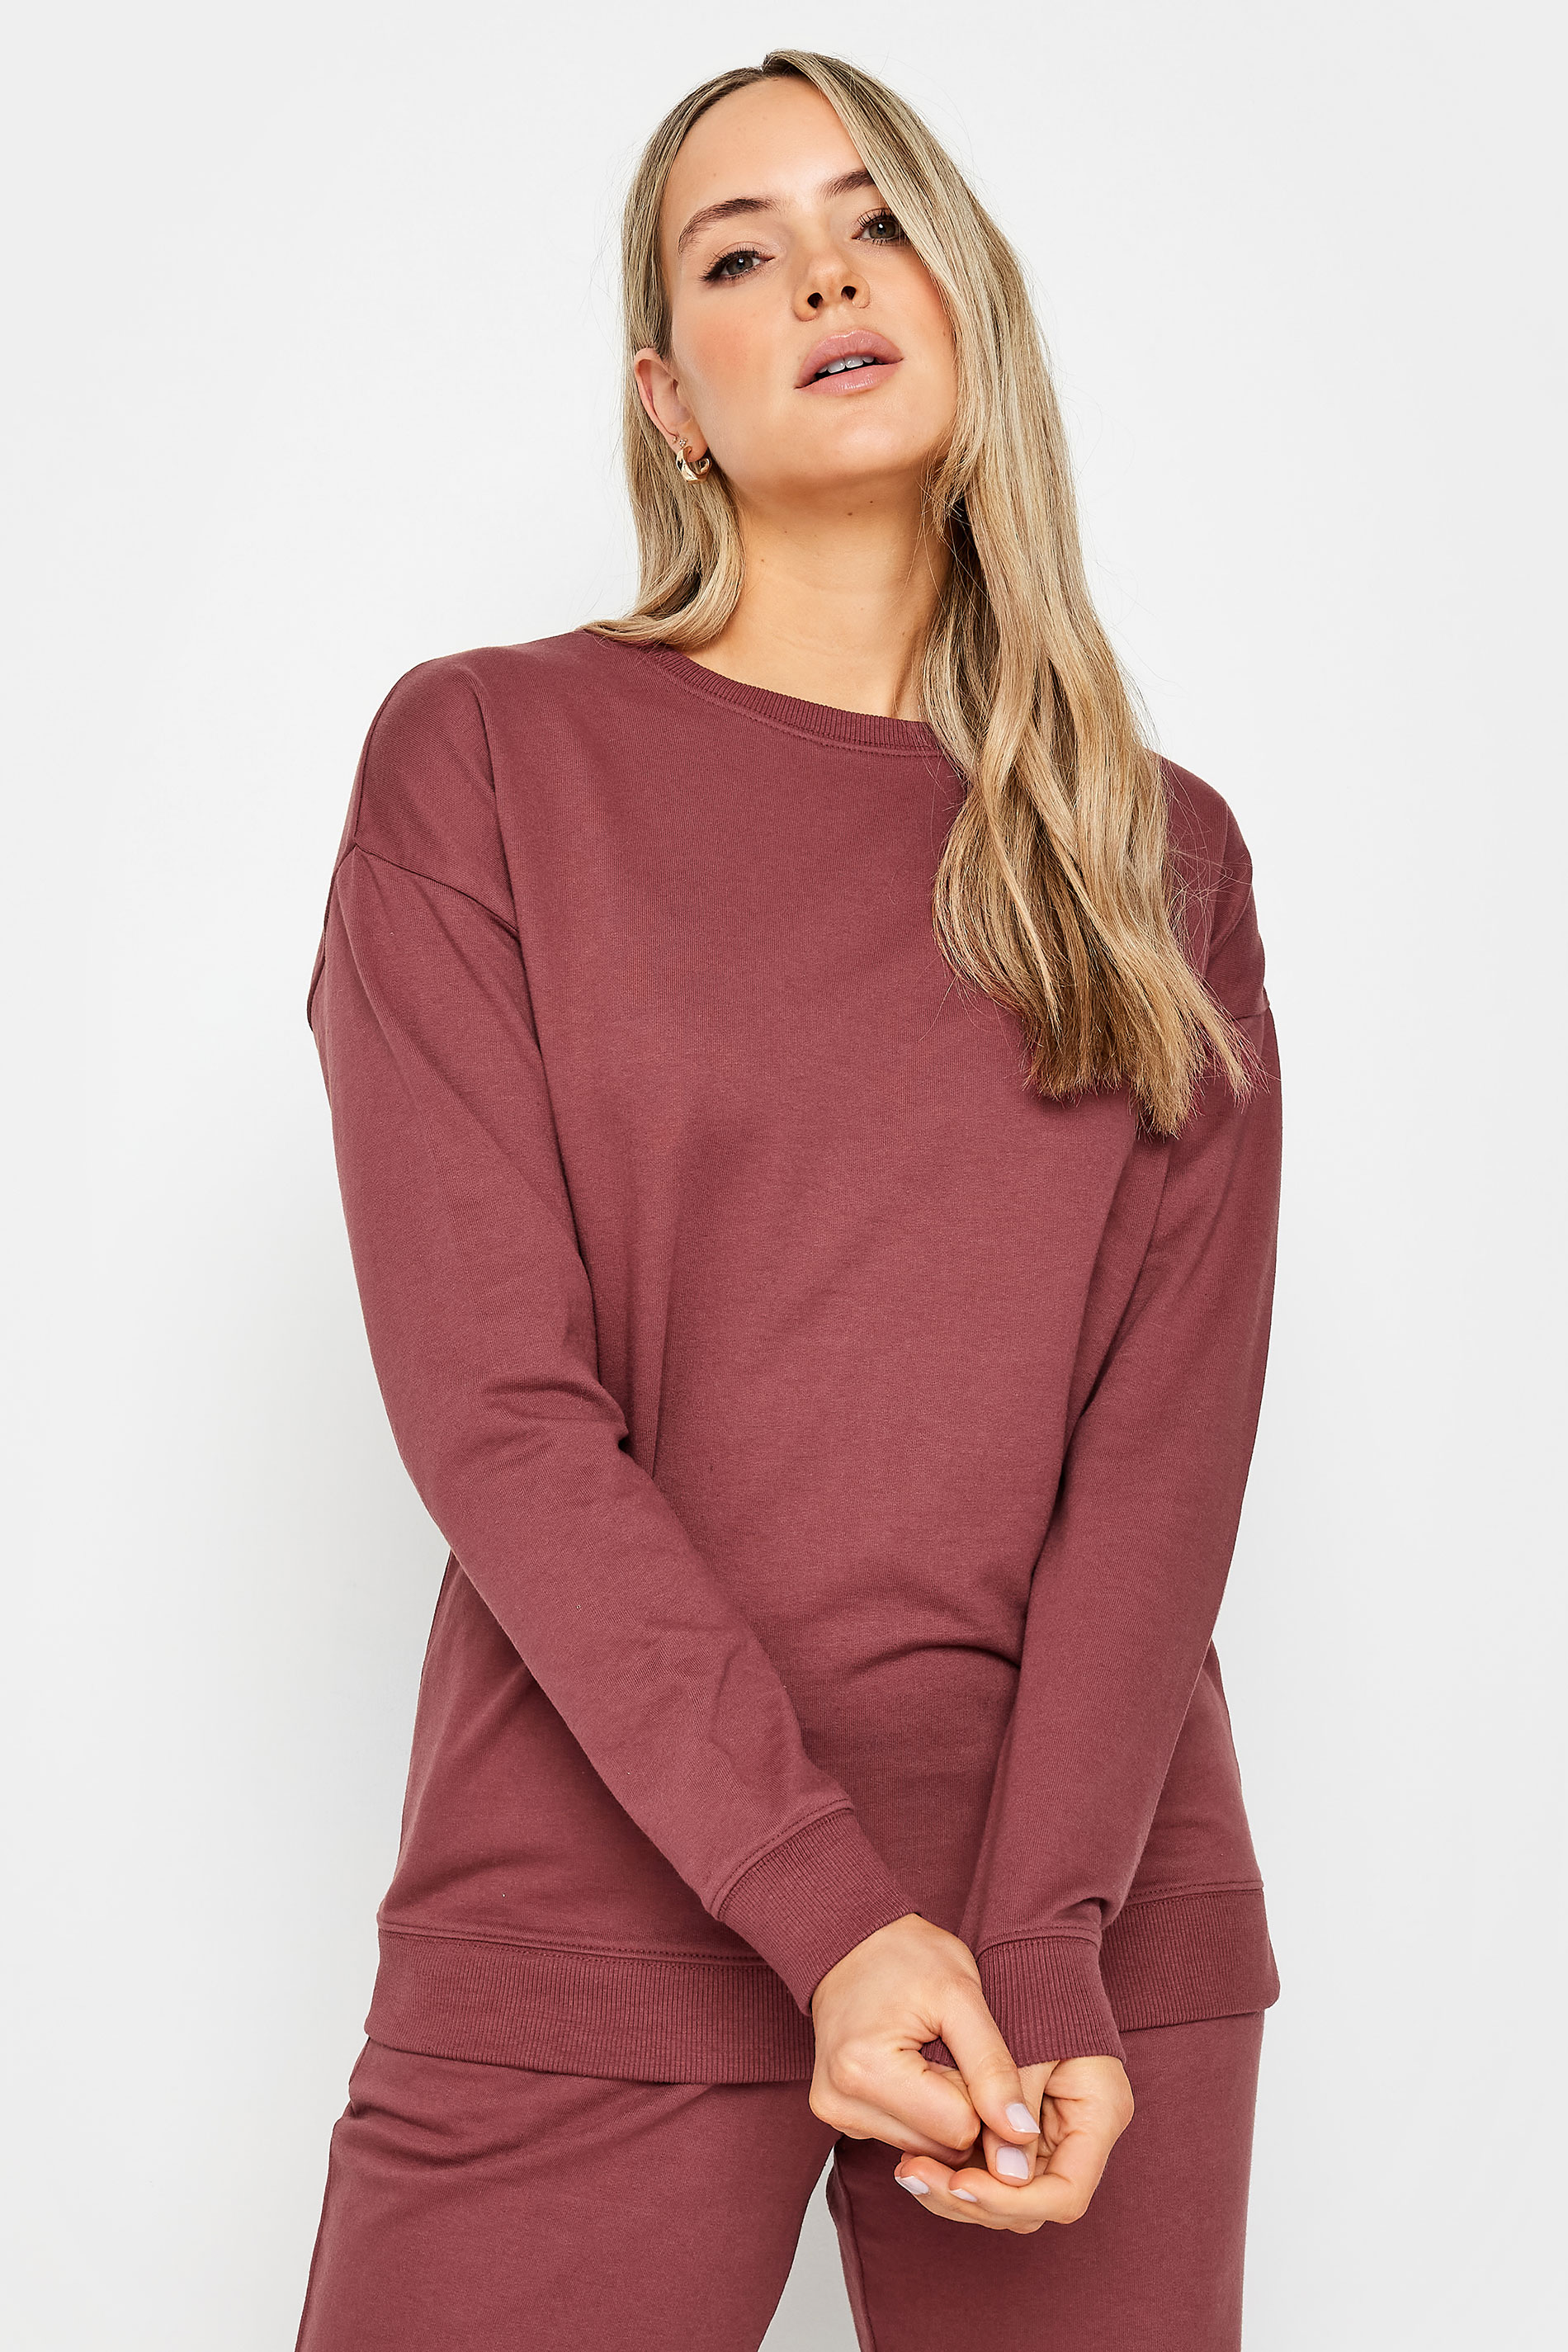 LTS Tall Women's Red Long Sleeve Sweatshirt | Long Tall Sally  1